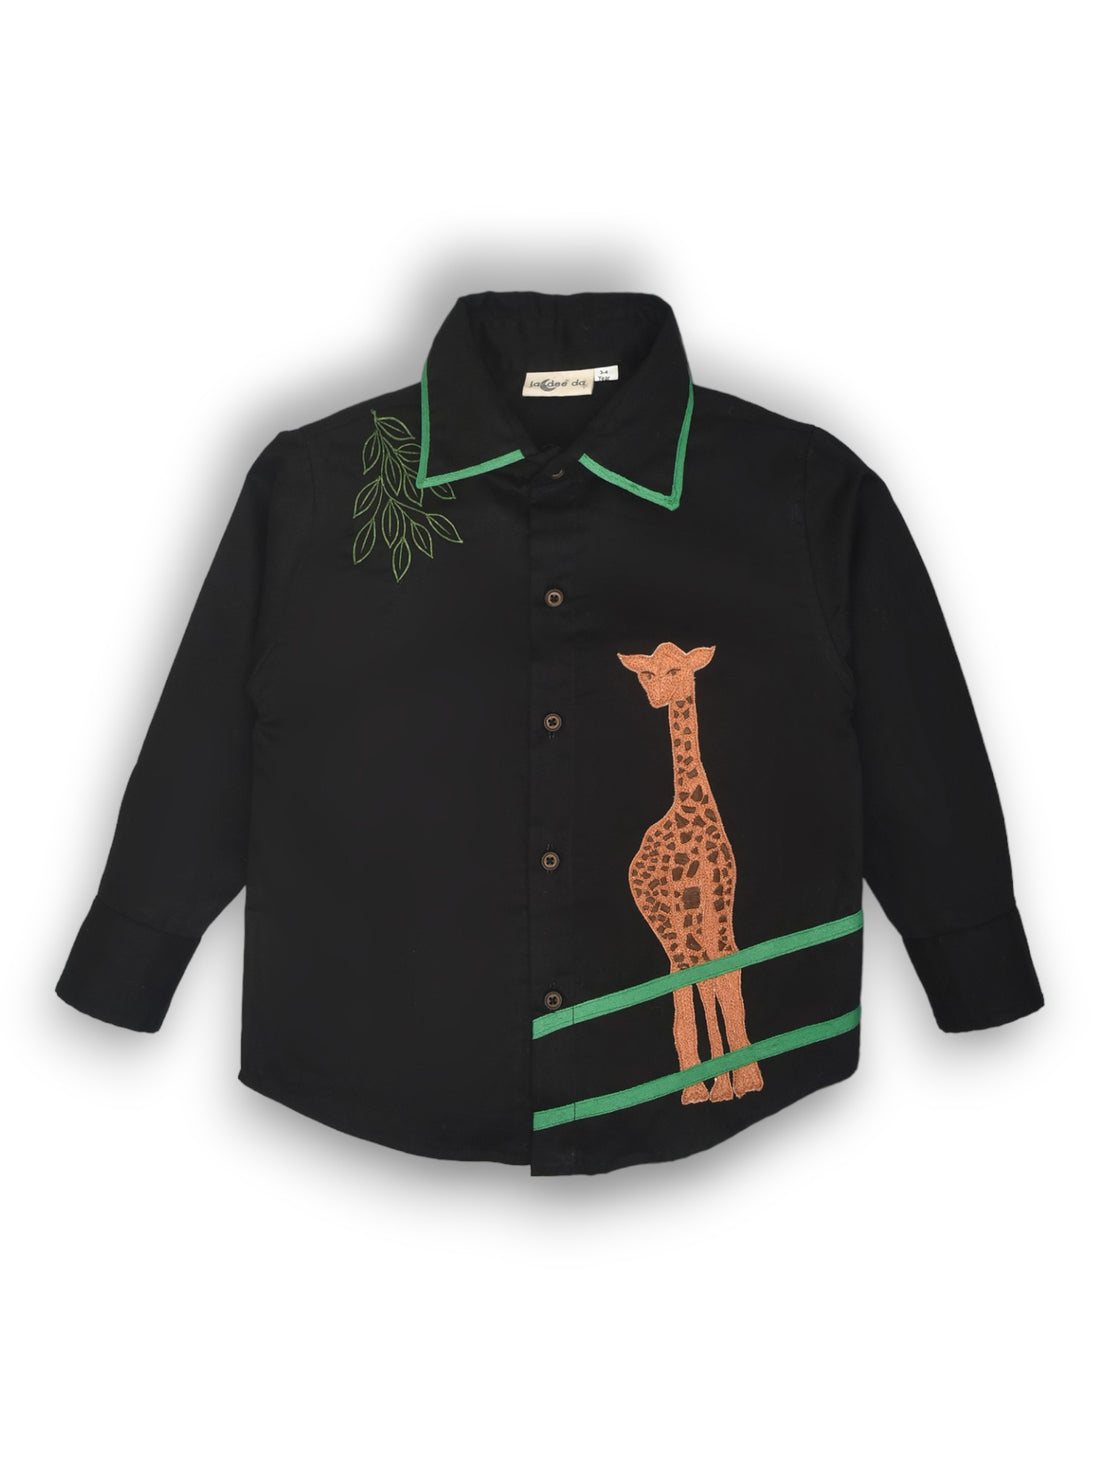 Black Shirt Embroidered with Graceful Giraffe Motif